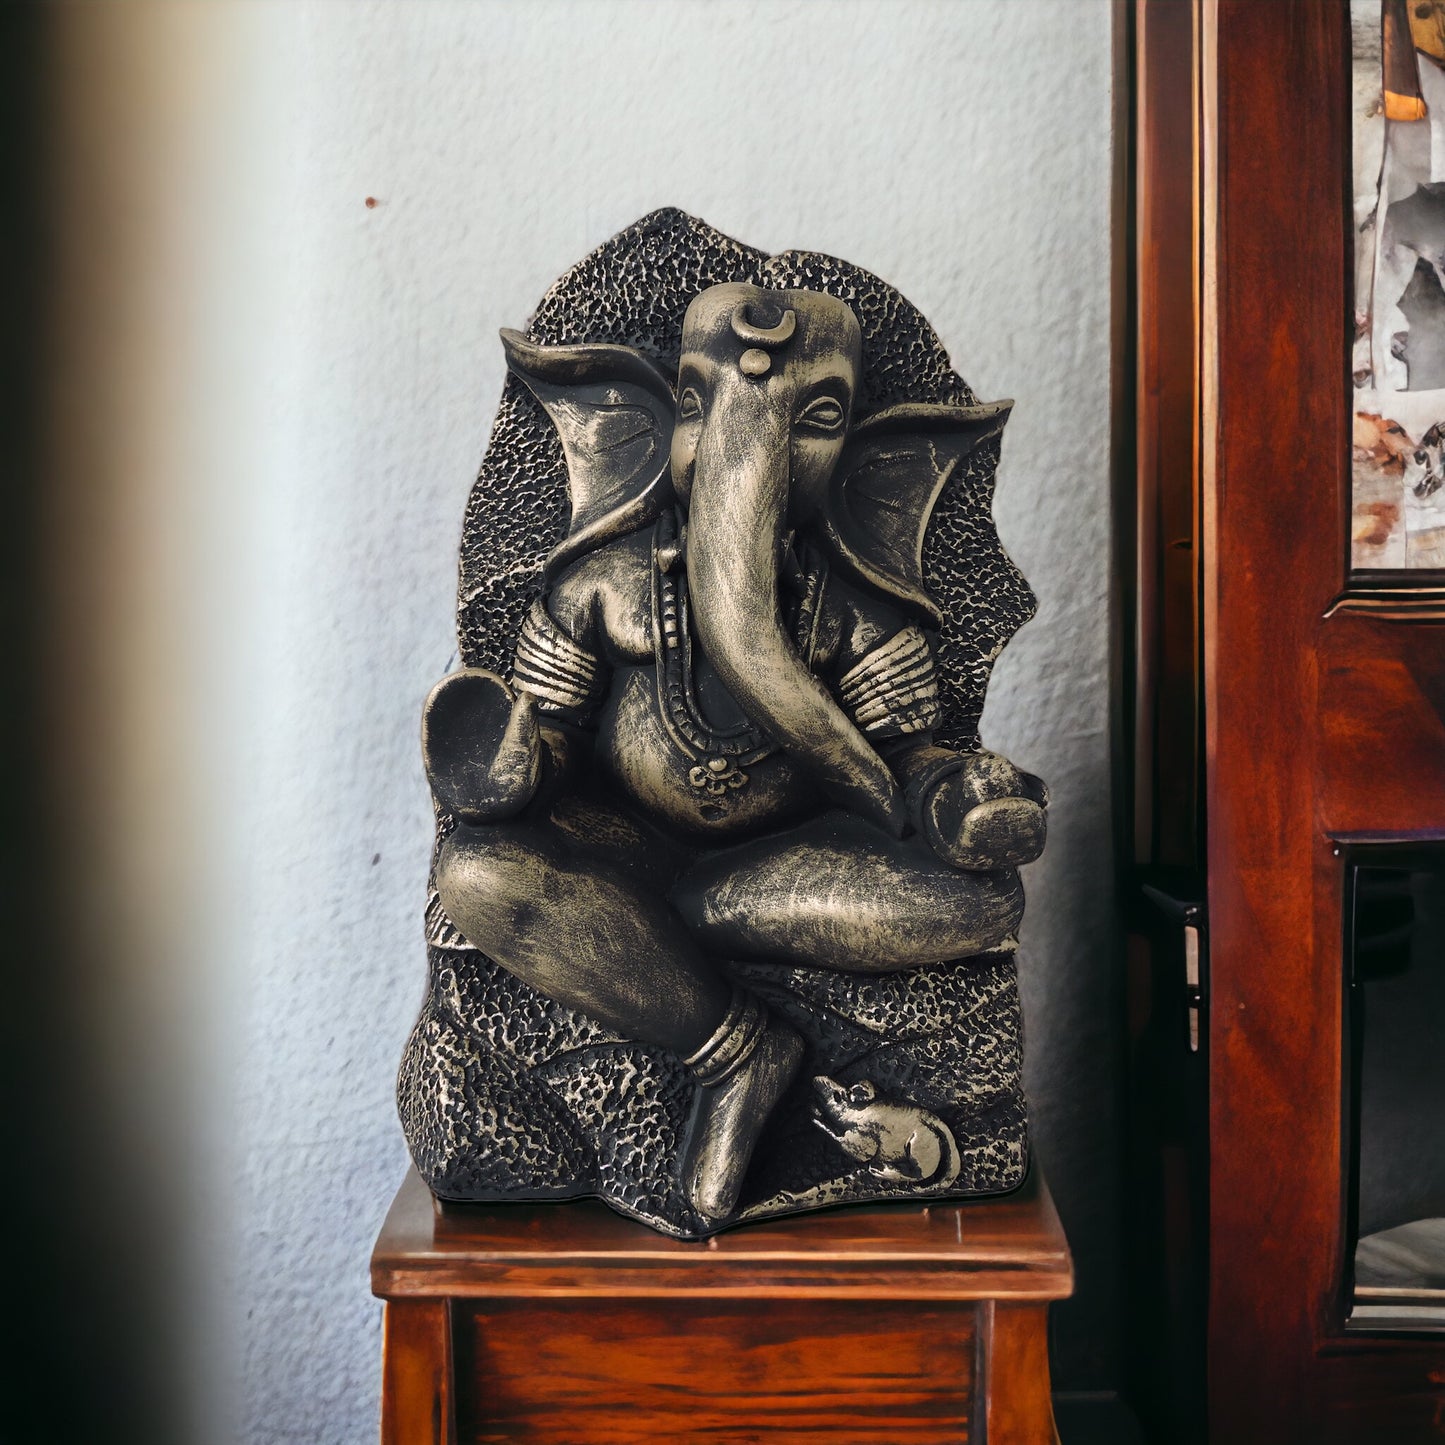 Embossed Ganesha In Stone / Antique Gold Finish by Satgurus